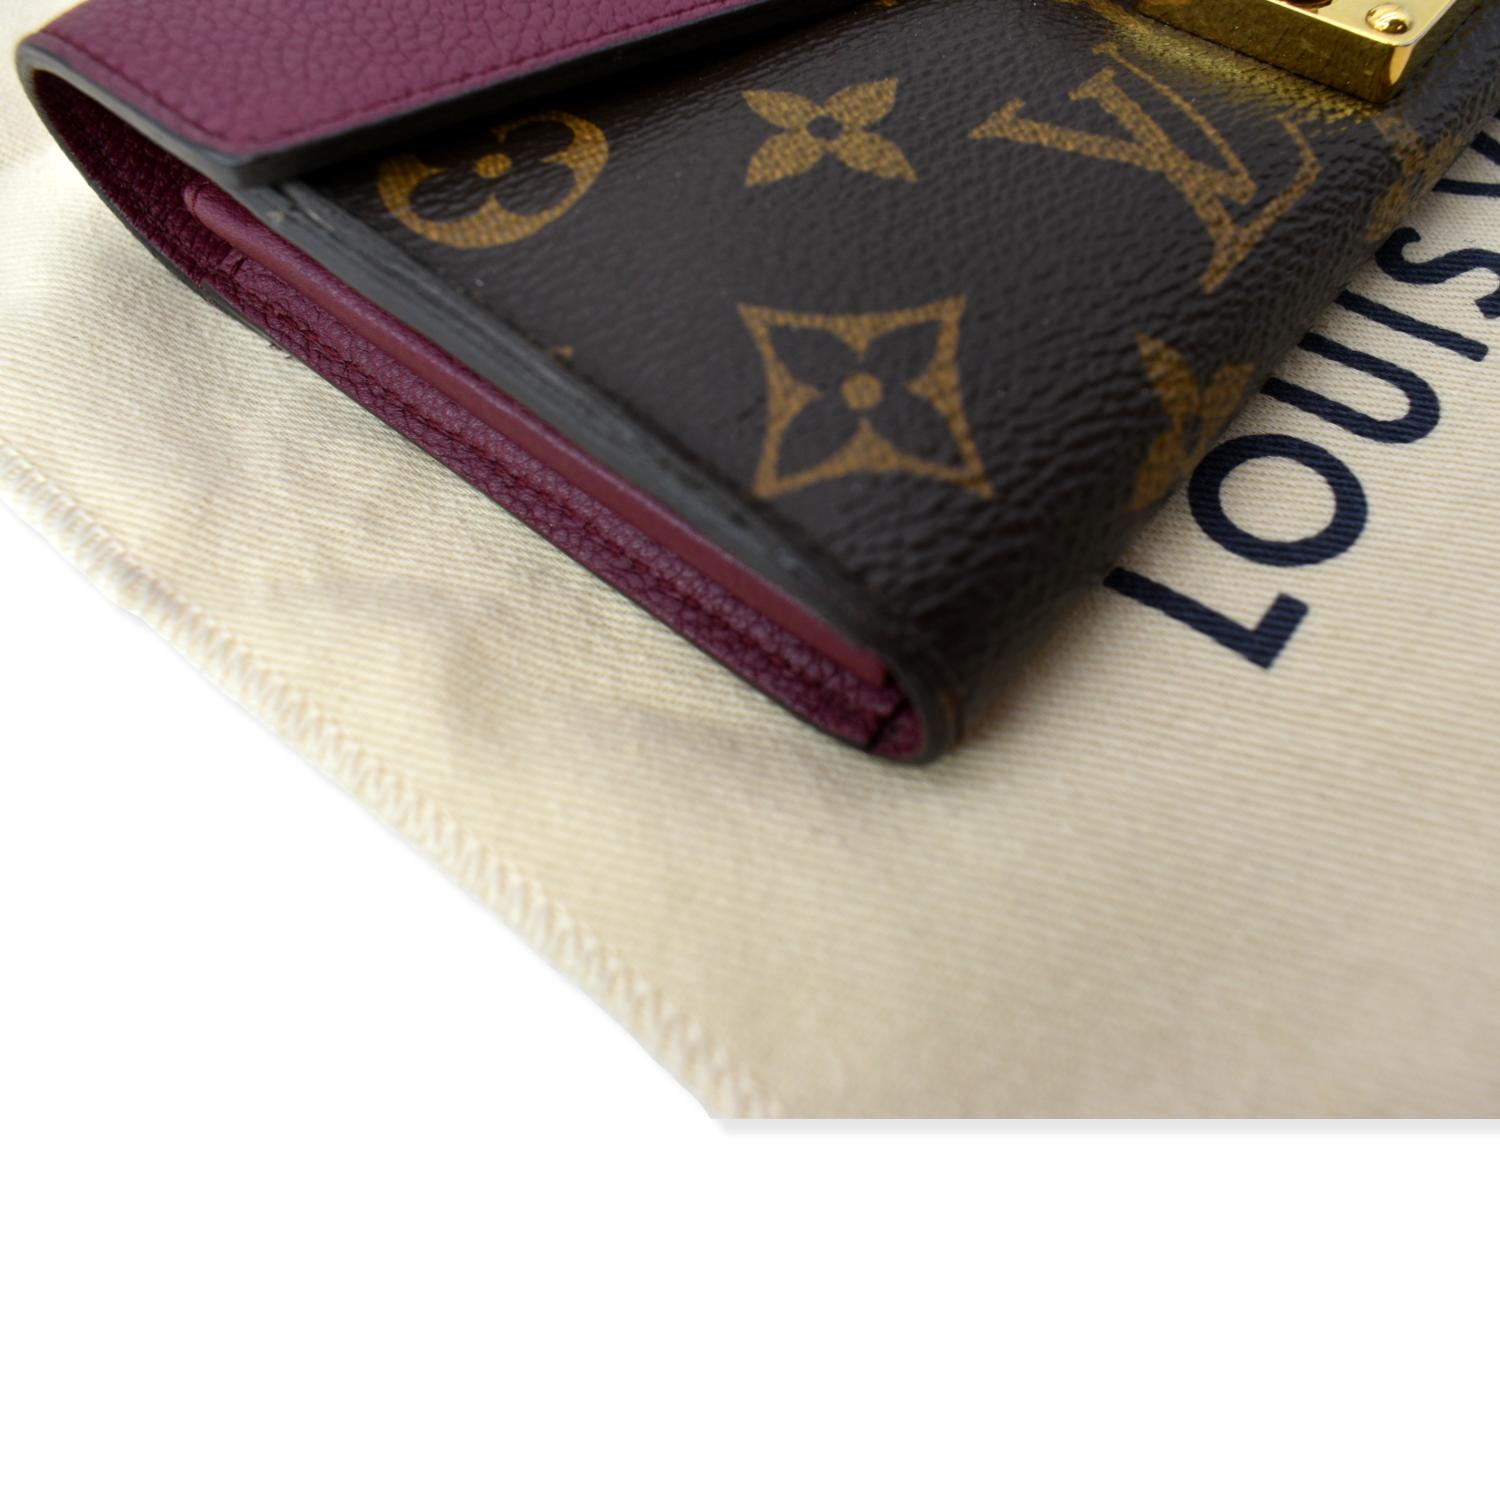 Louis Vuitton Monogram Canvas Card Holder Brown - DDH